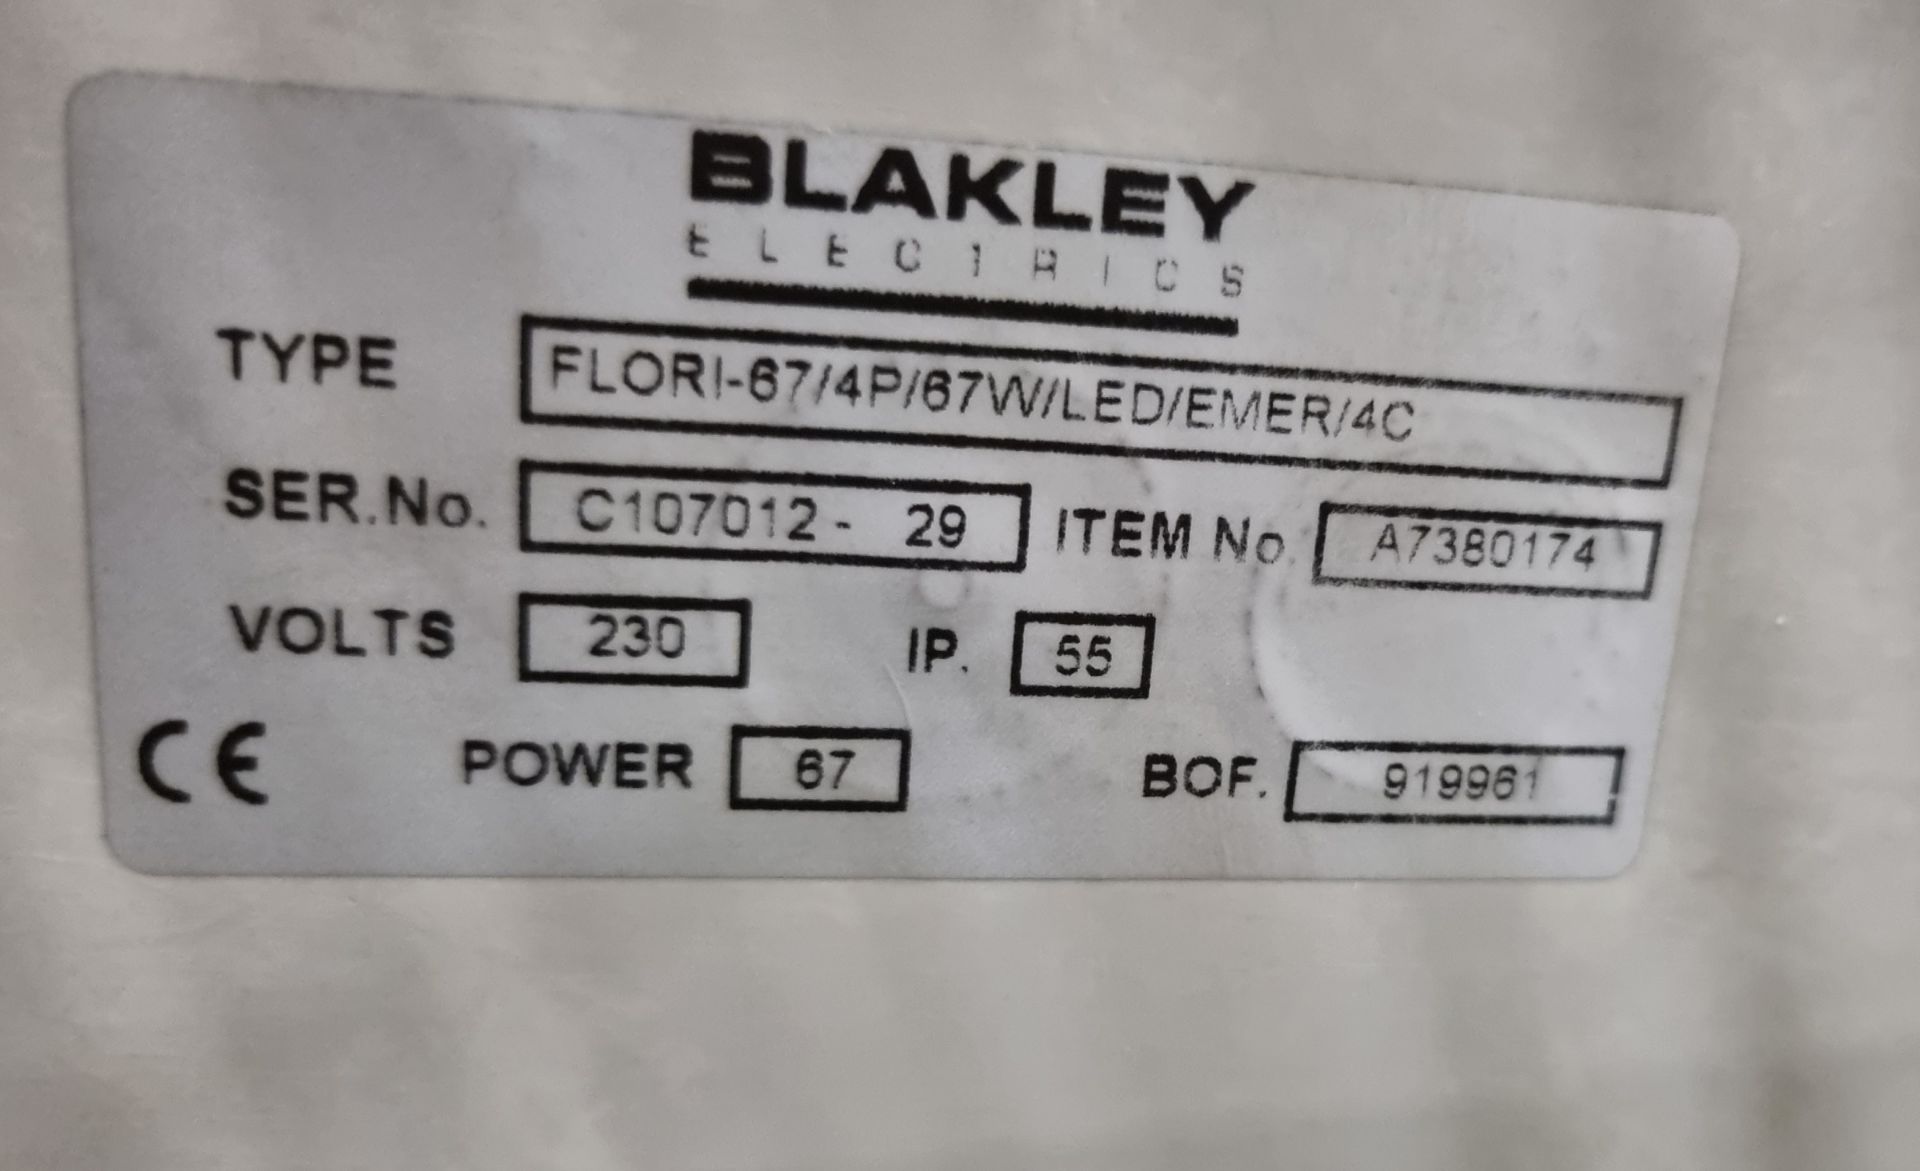 8x Lighting assemblies - 6x Blakley Electrics FLORI-67/4P/67w/LED Lighting 230V - Image 4 of 4